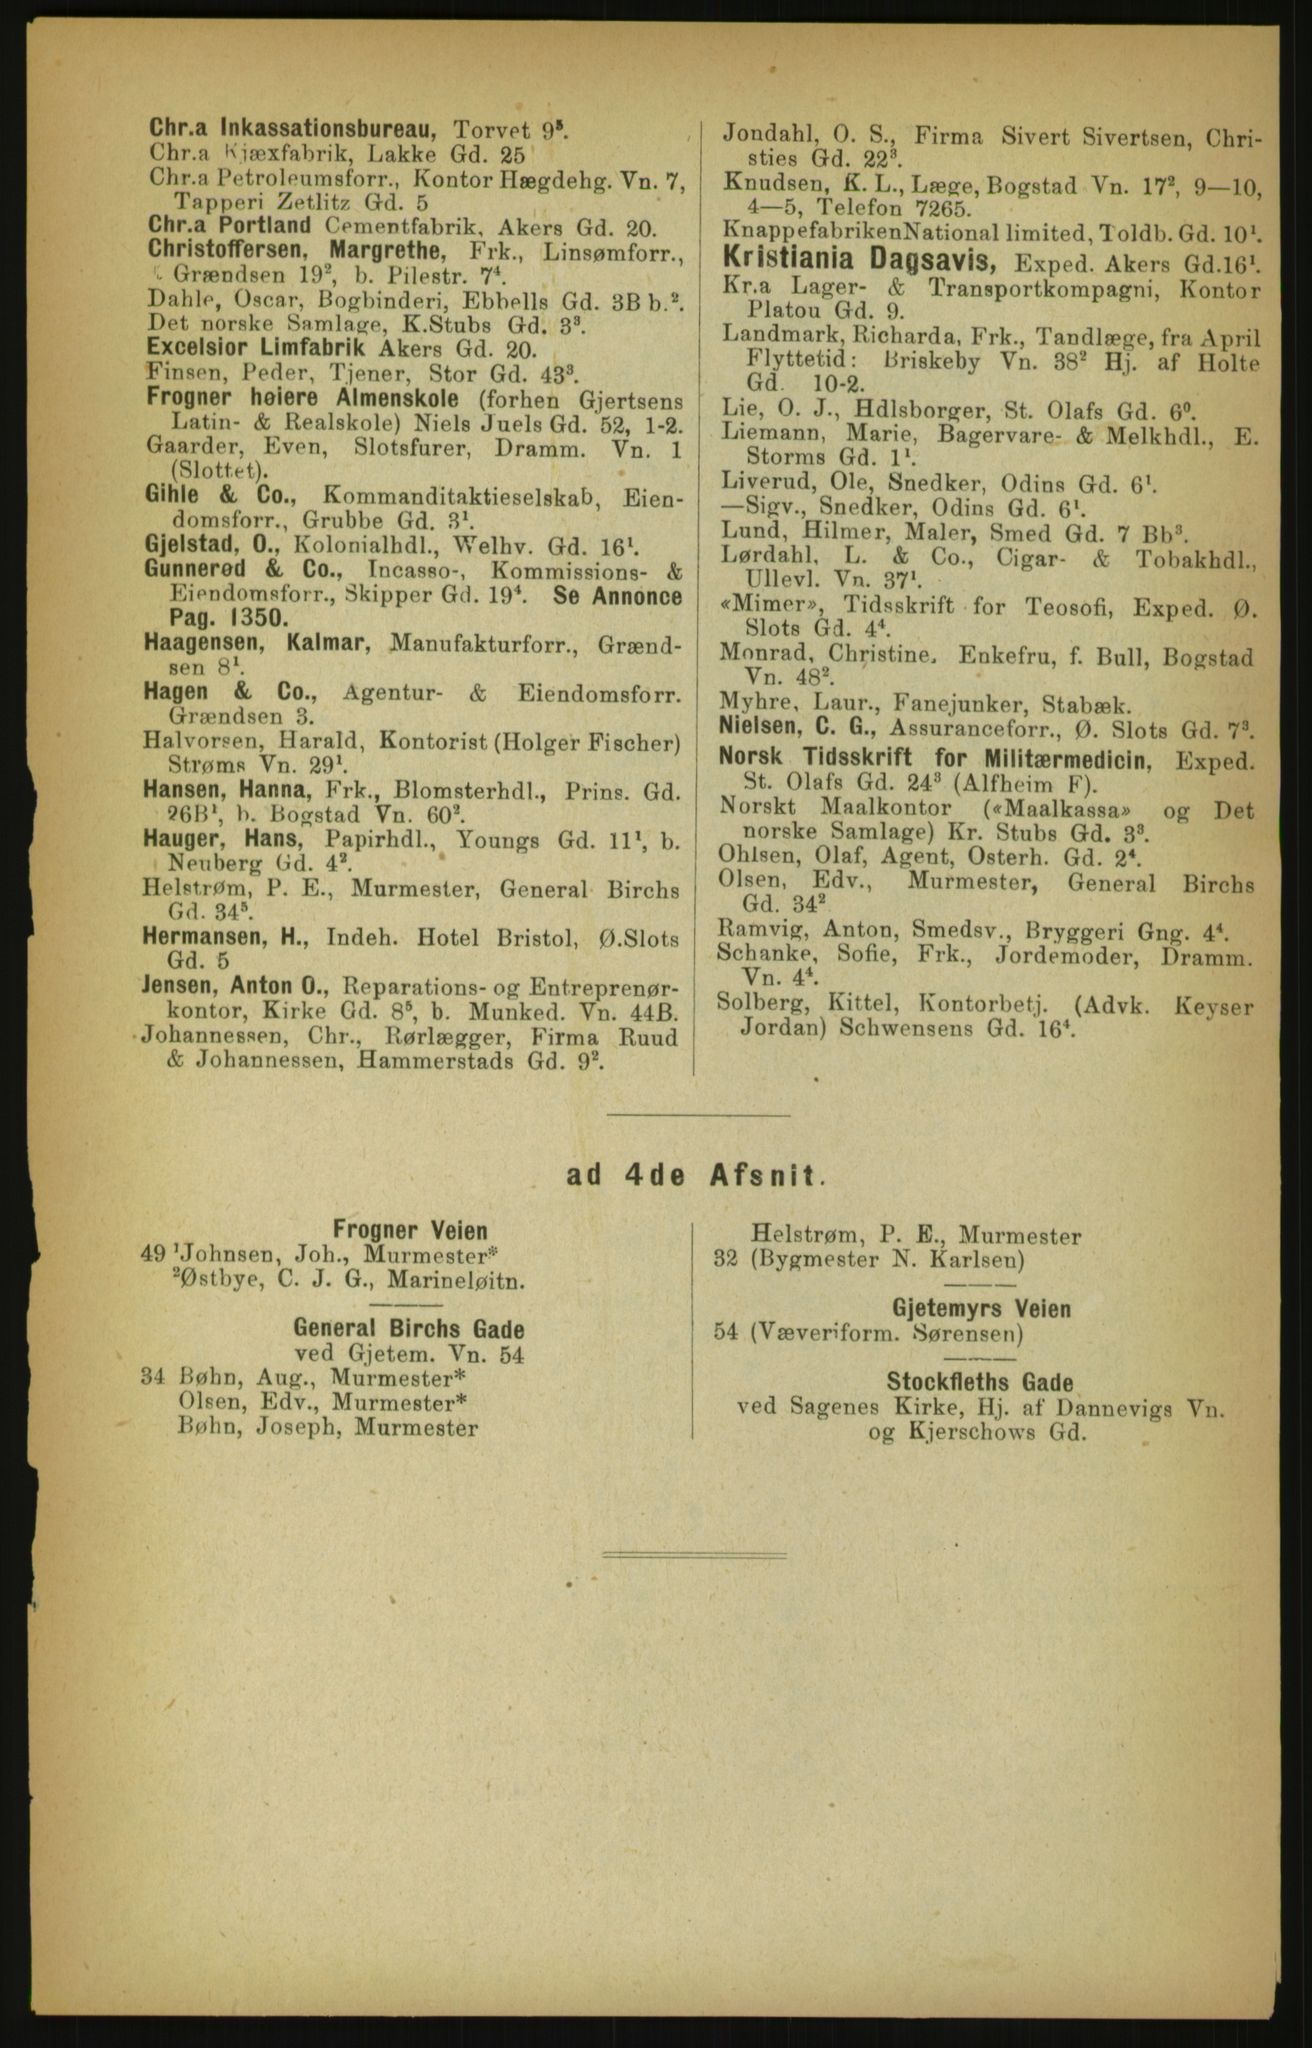 Kristiania/Oslo adressebok, PUBL/-, 1900